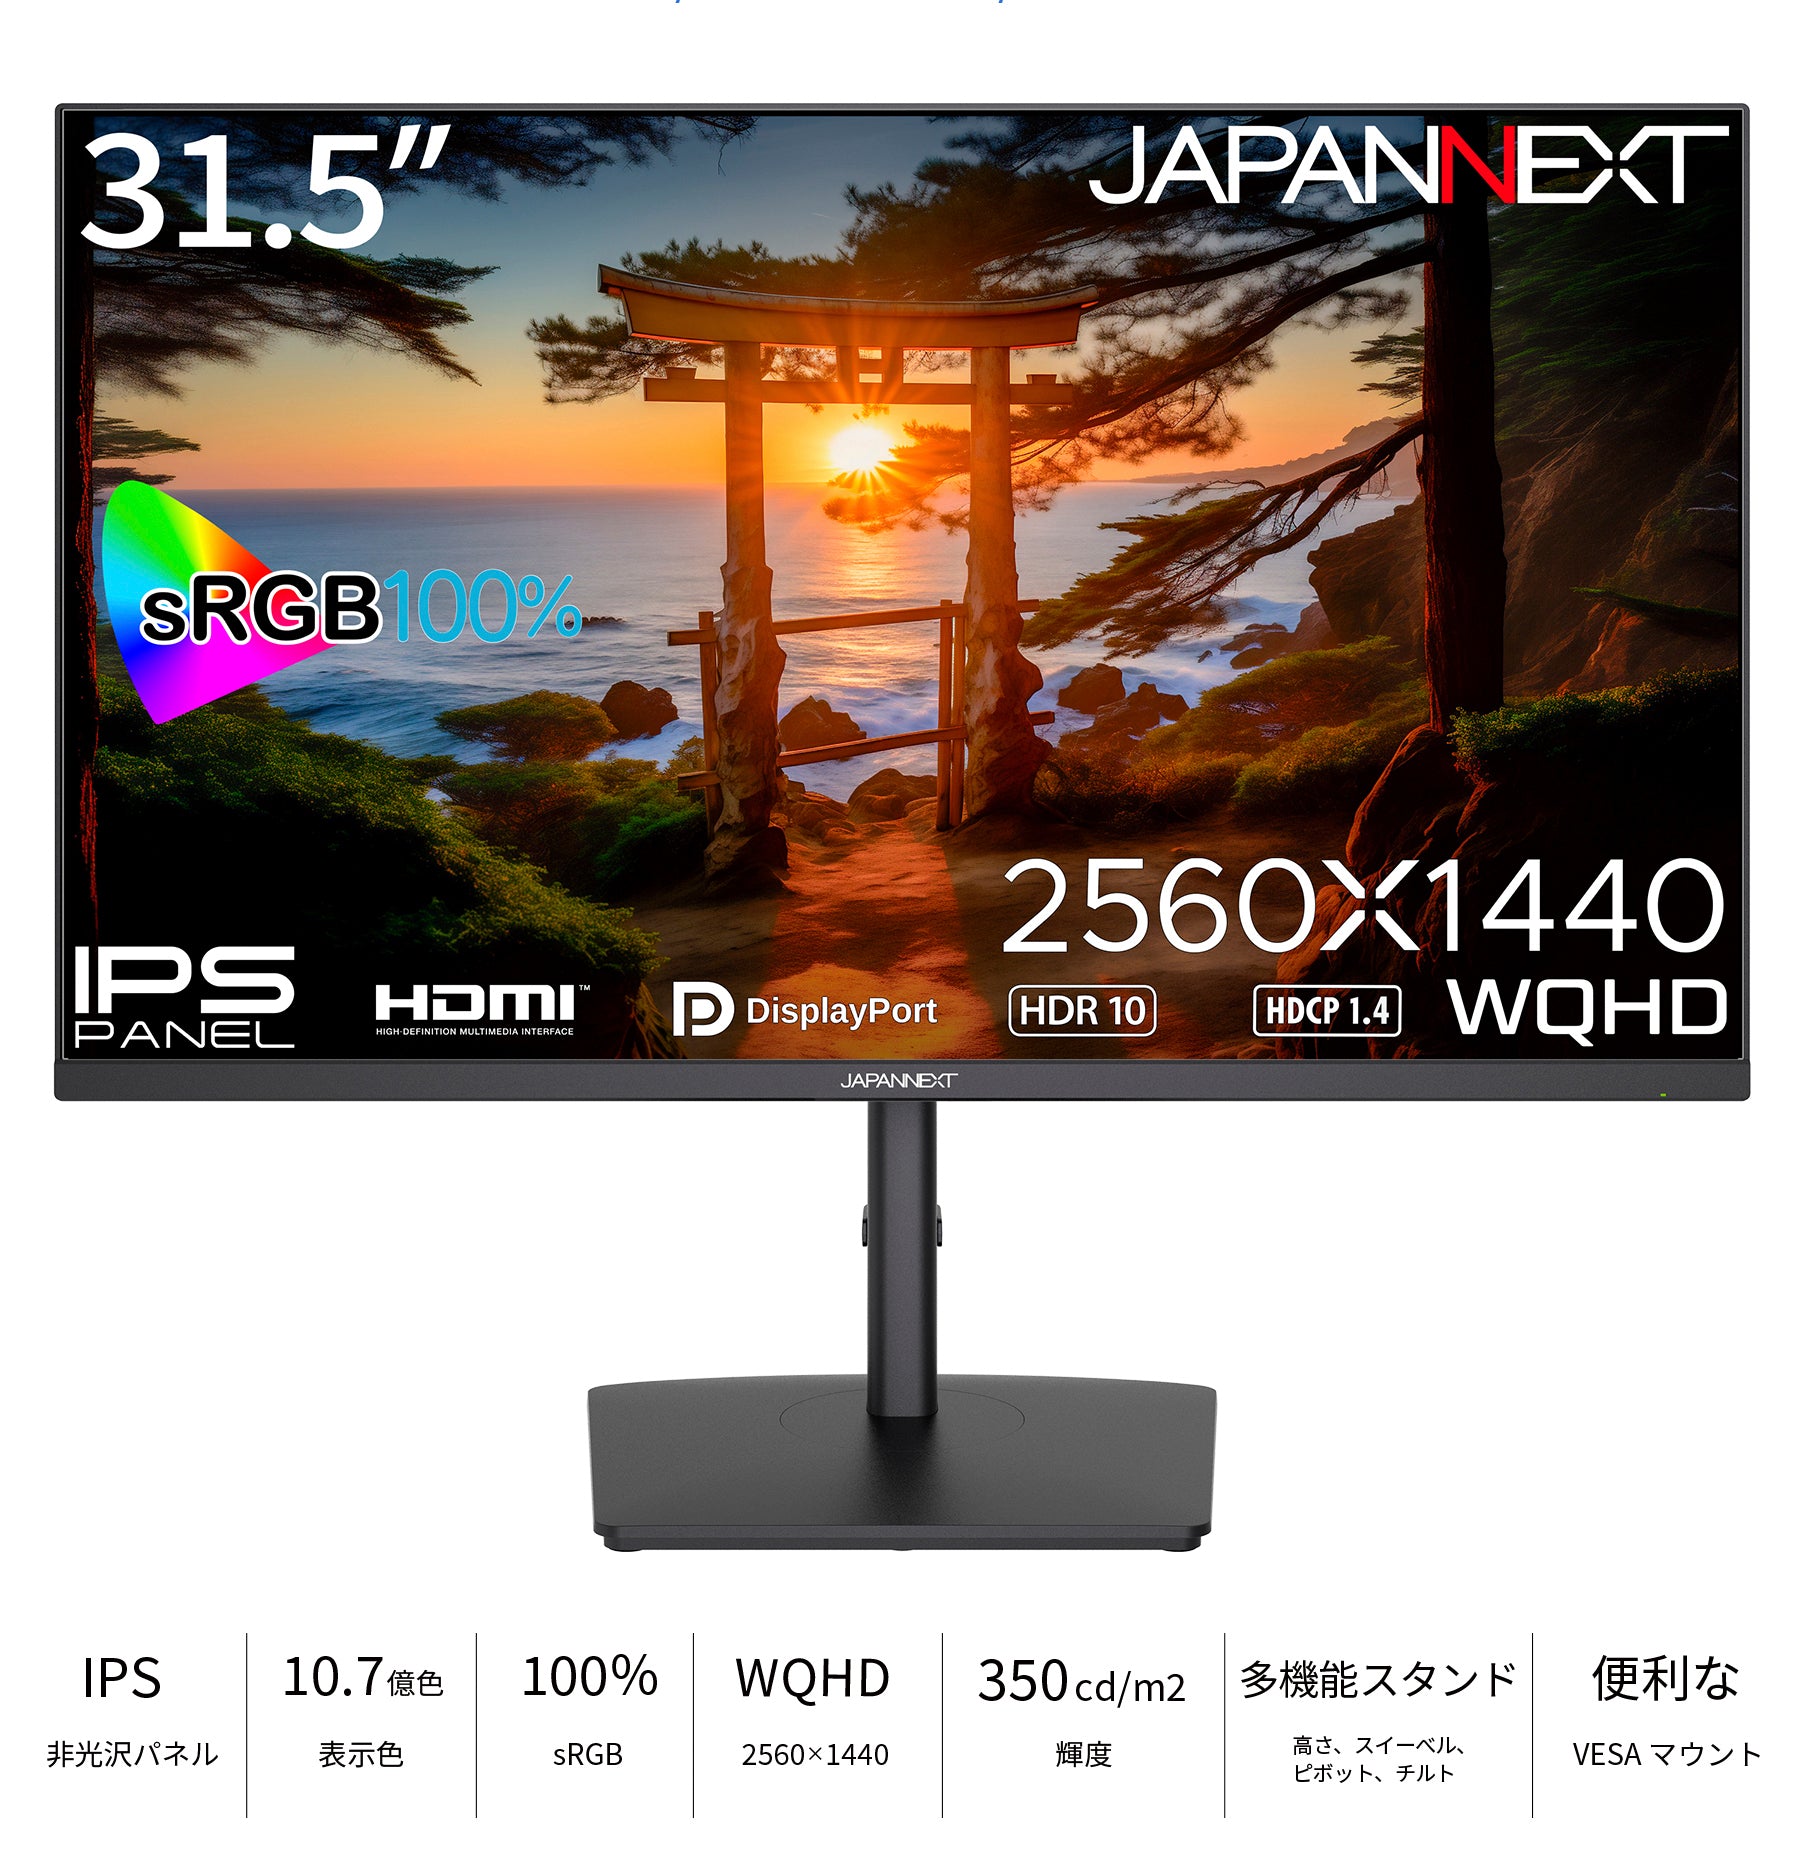 JAPANNEXT 31.5インチ IPSパネル搭載 WQHD(2560x1440)解像度 液晶